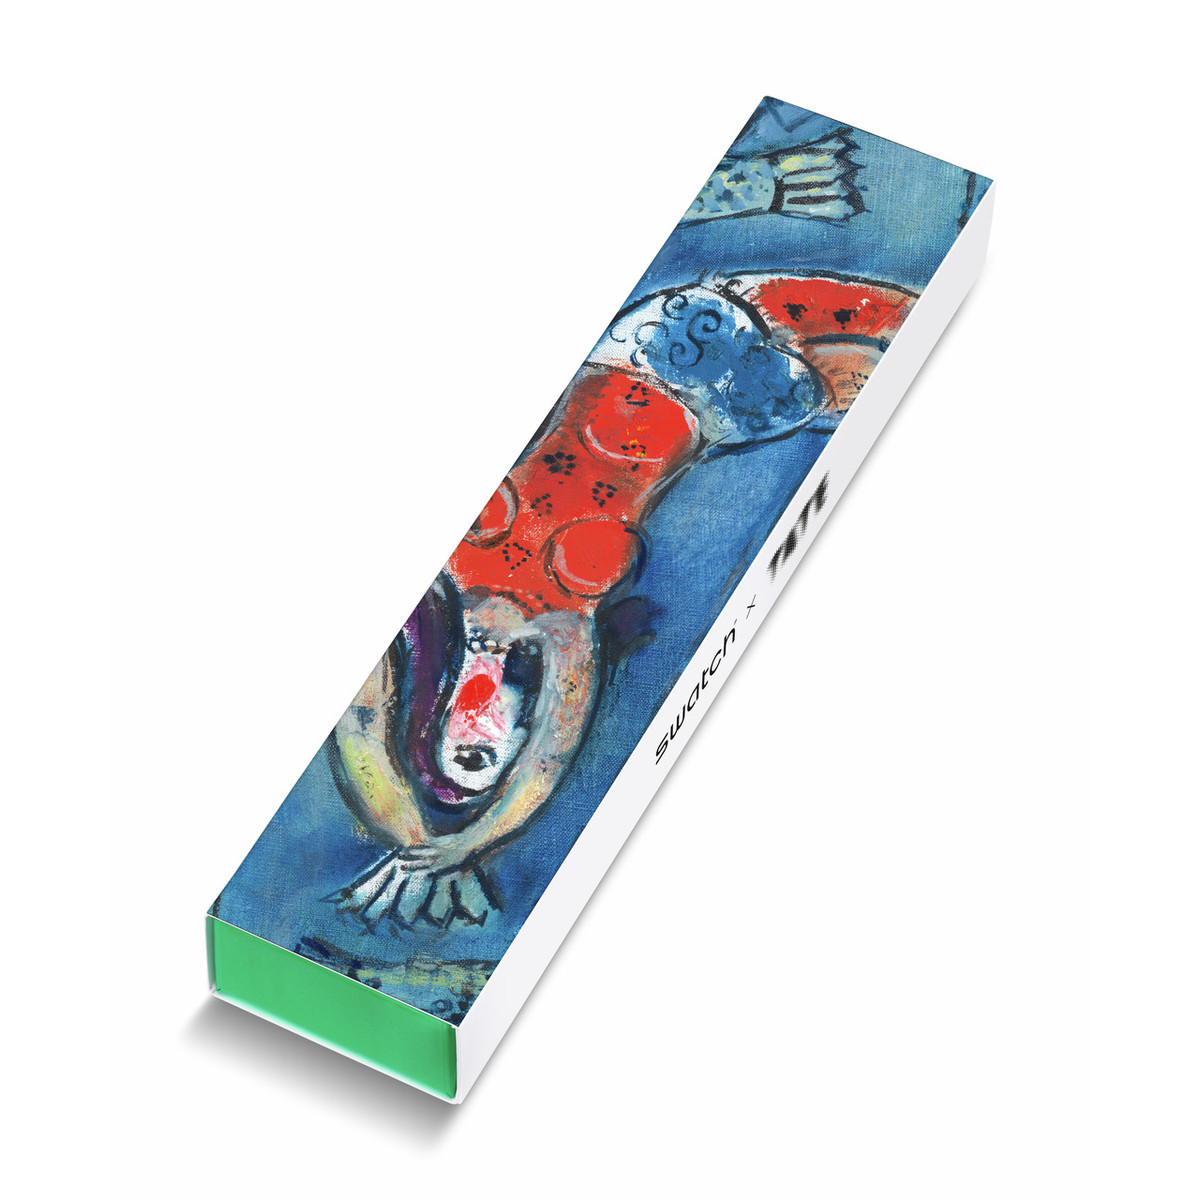 Montre SWATCH New gent bioceramic Chagall's blue circus homme bracelet silicone bleu - vue D3